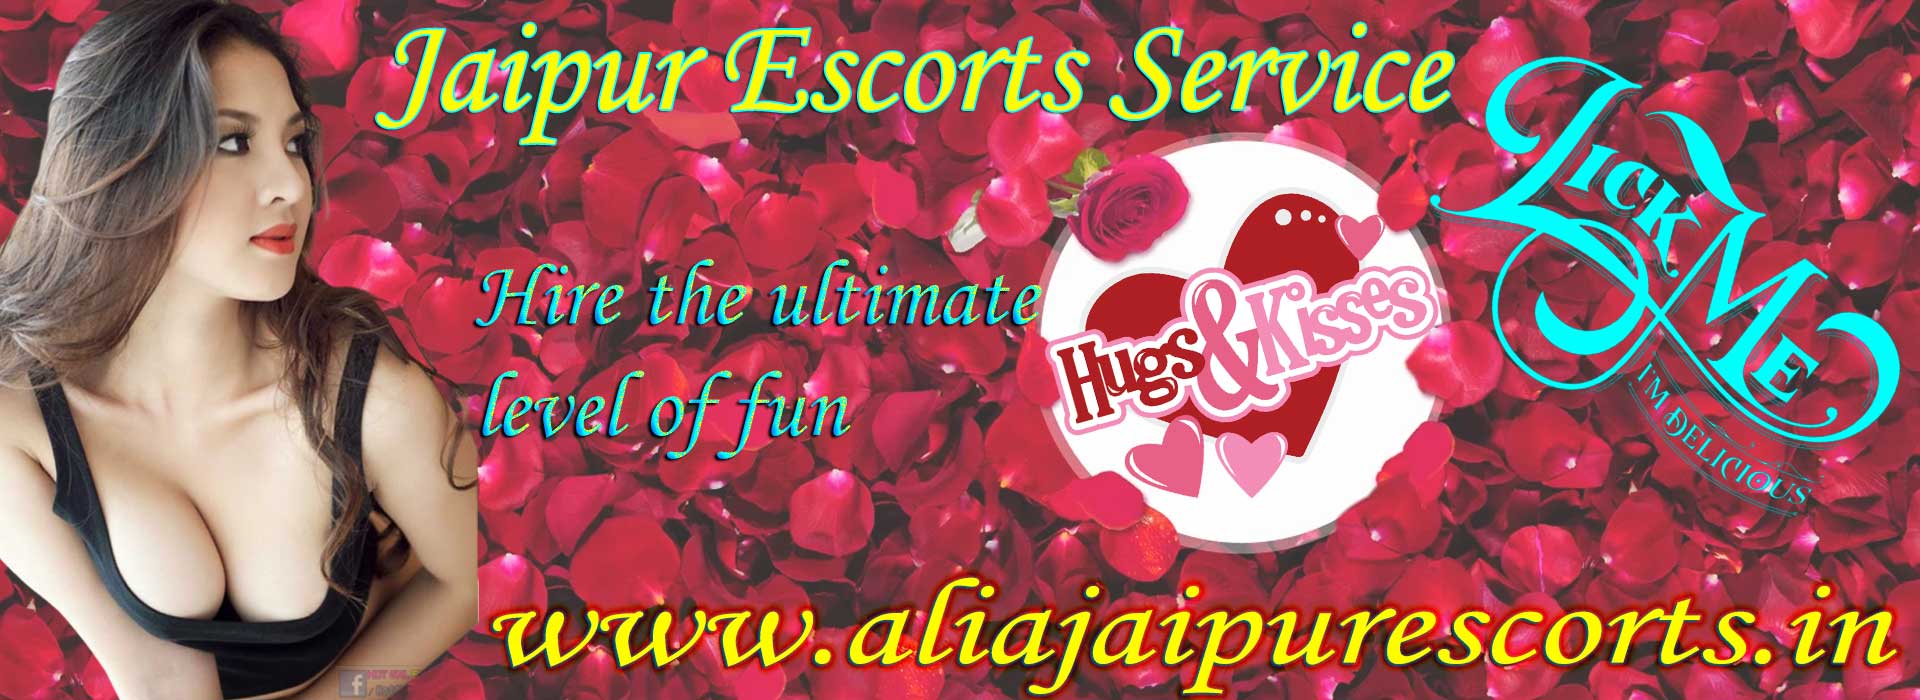 Jaipur Escorts services